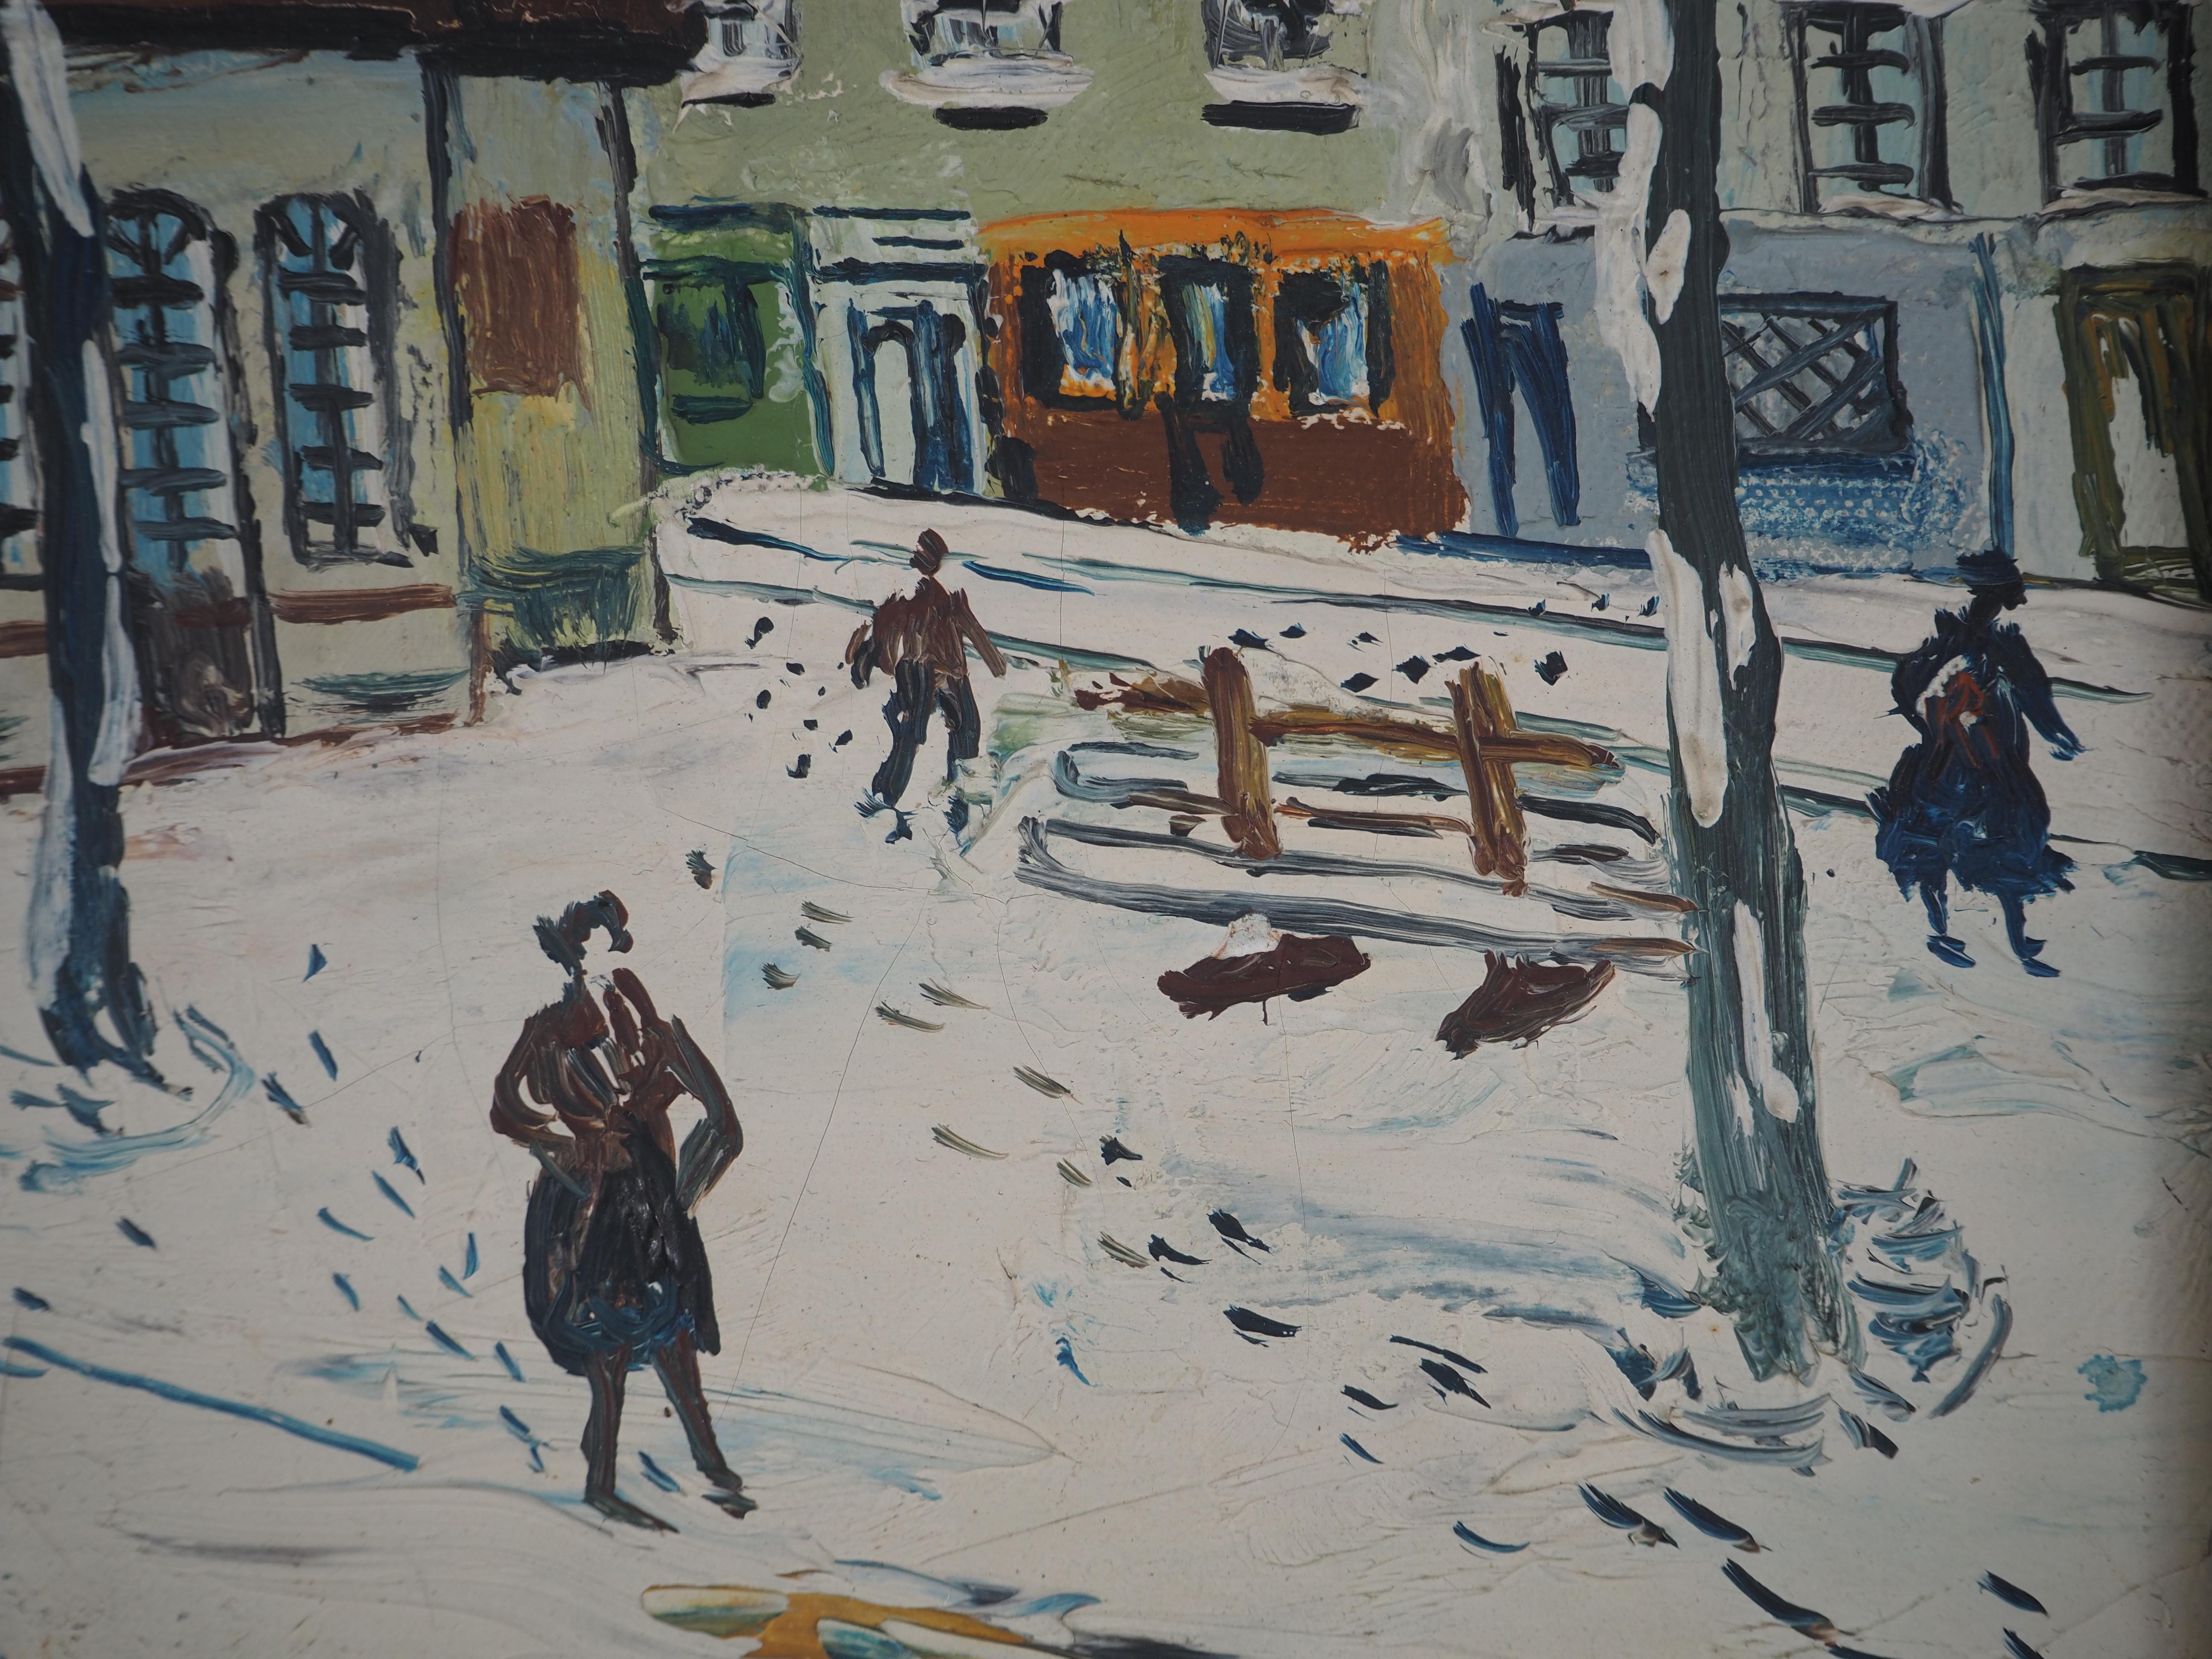 Paris, Winter in Montmartre, Theatre - Original oil on canvas - Signed - Post-Impressionist Painting by Elisée Maclet